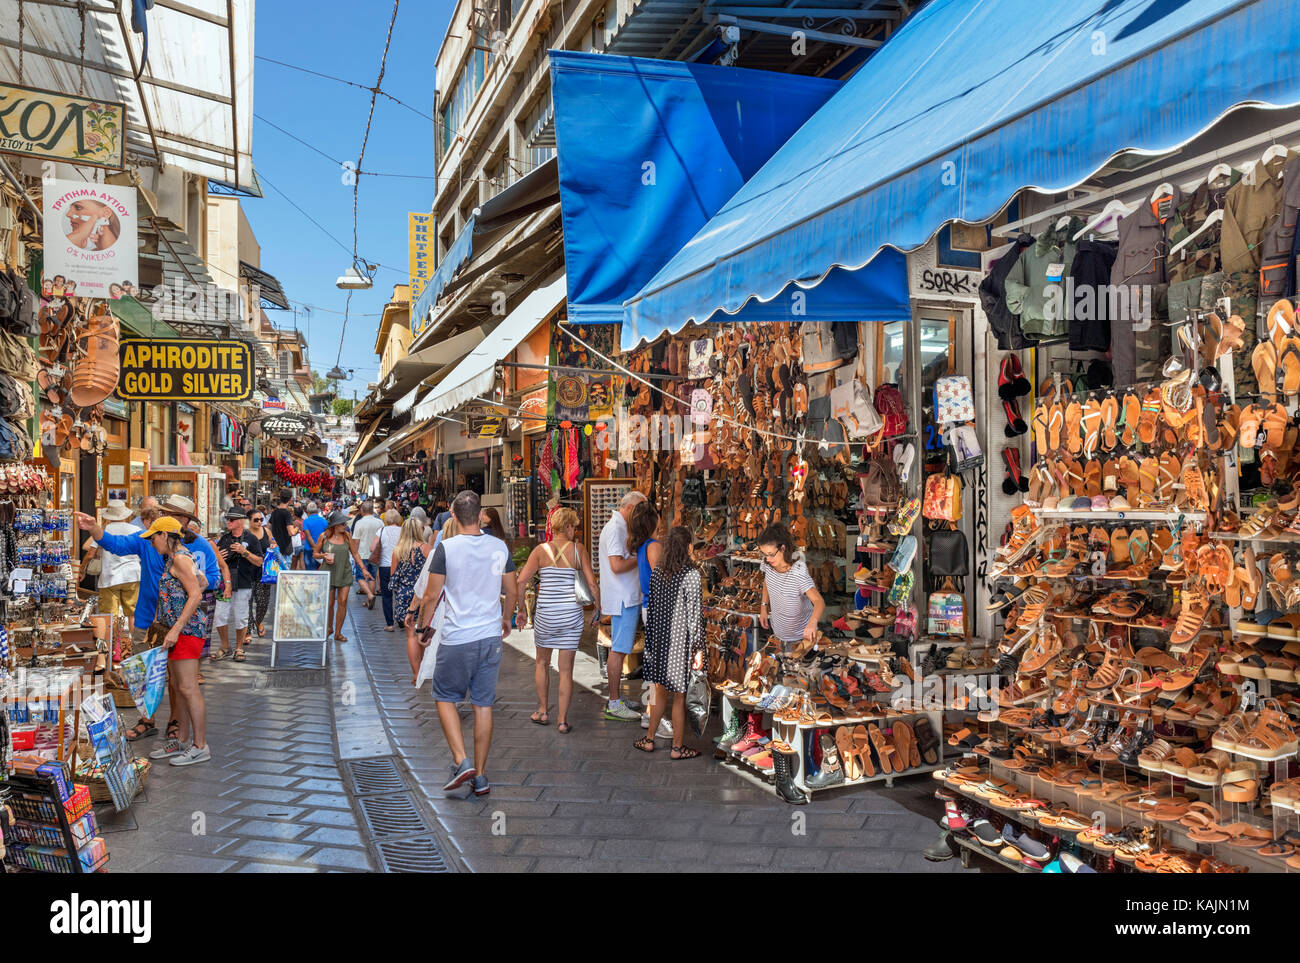 Monastiraki Flea Market High Resolution Stock Photography and Images - Alamy